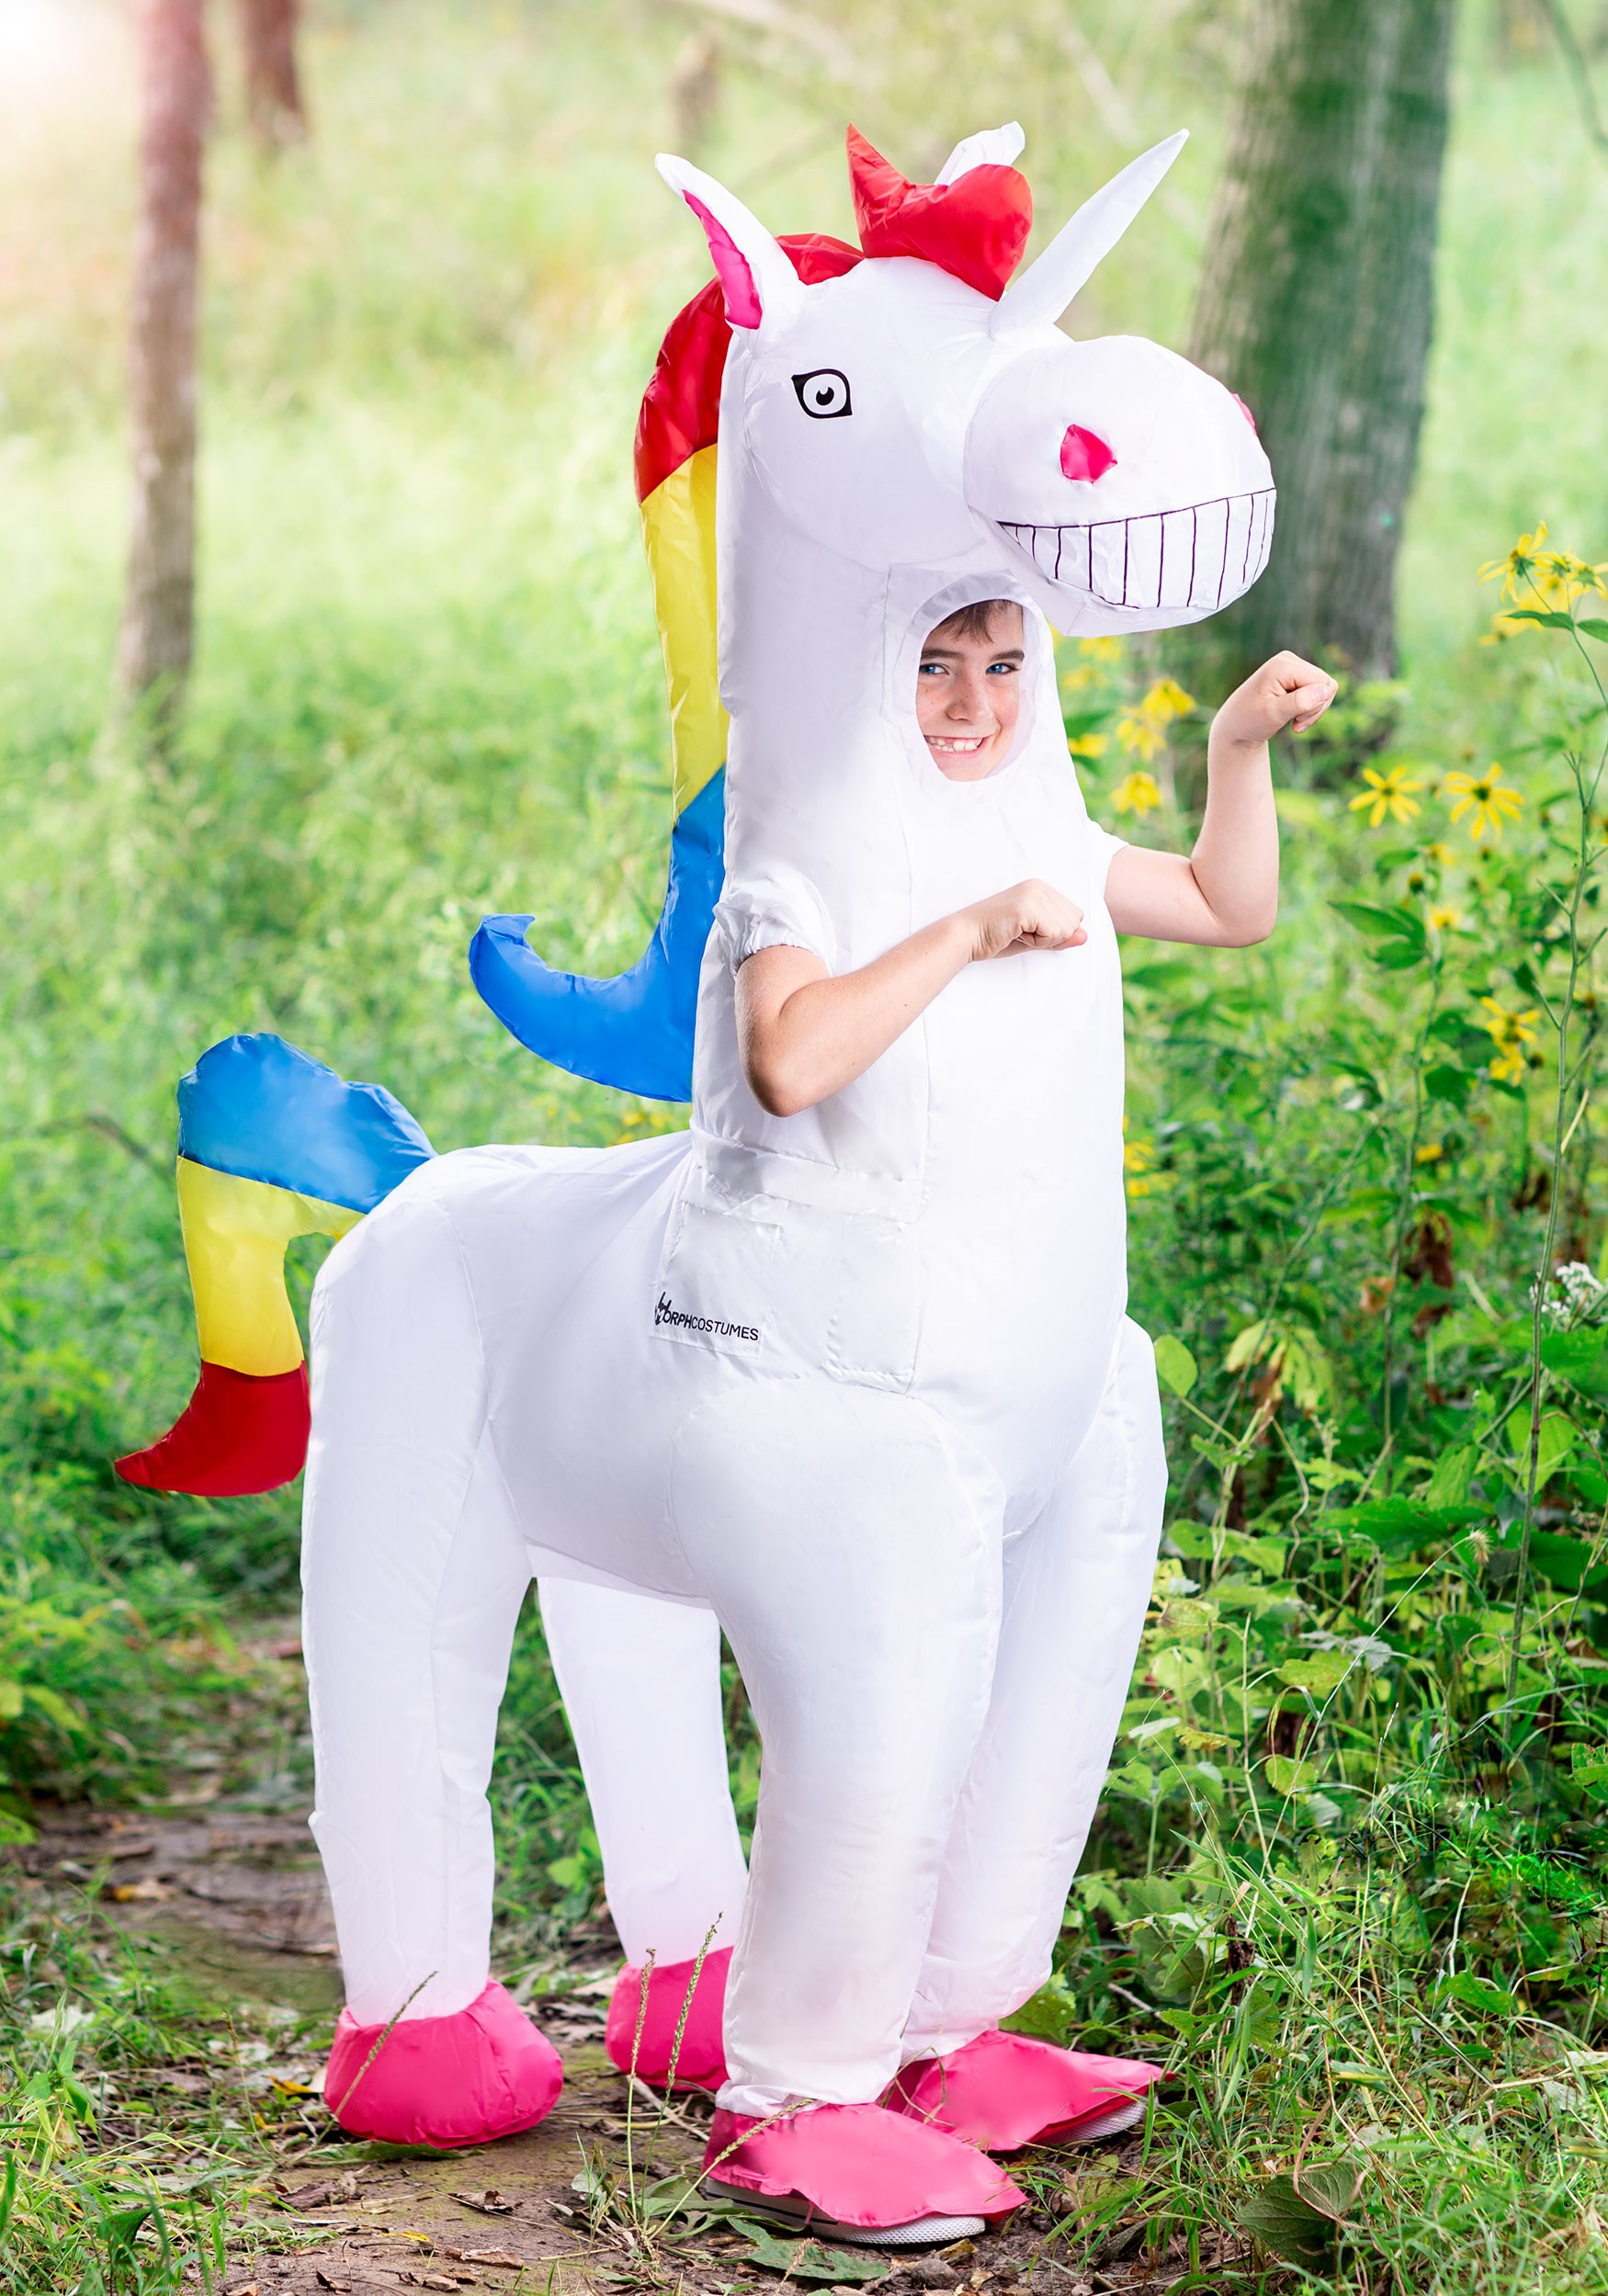 kool Herhaal Arab Giant Inflatable Unicorn Costume for a Child